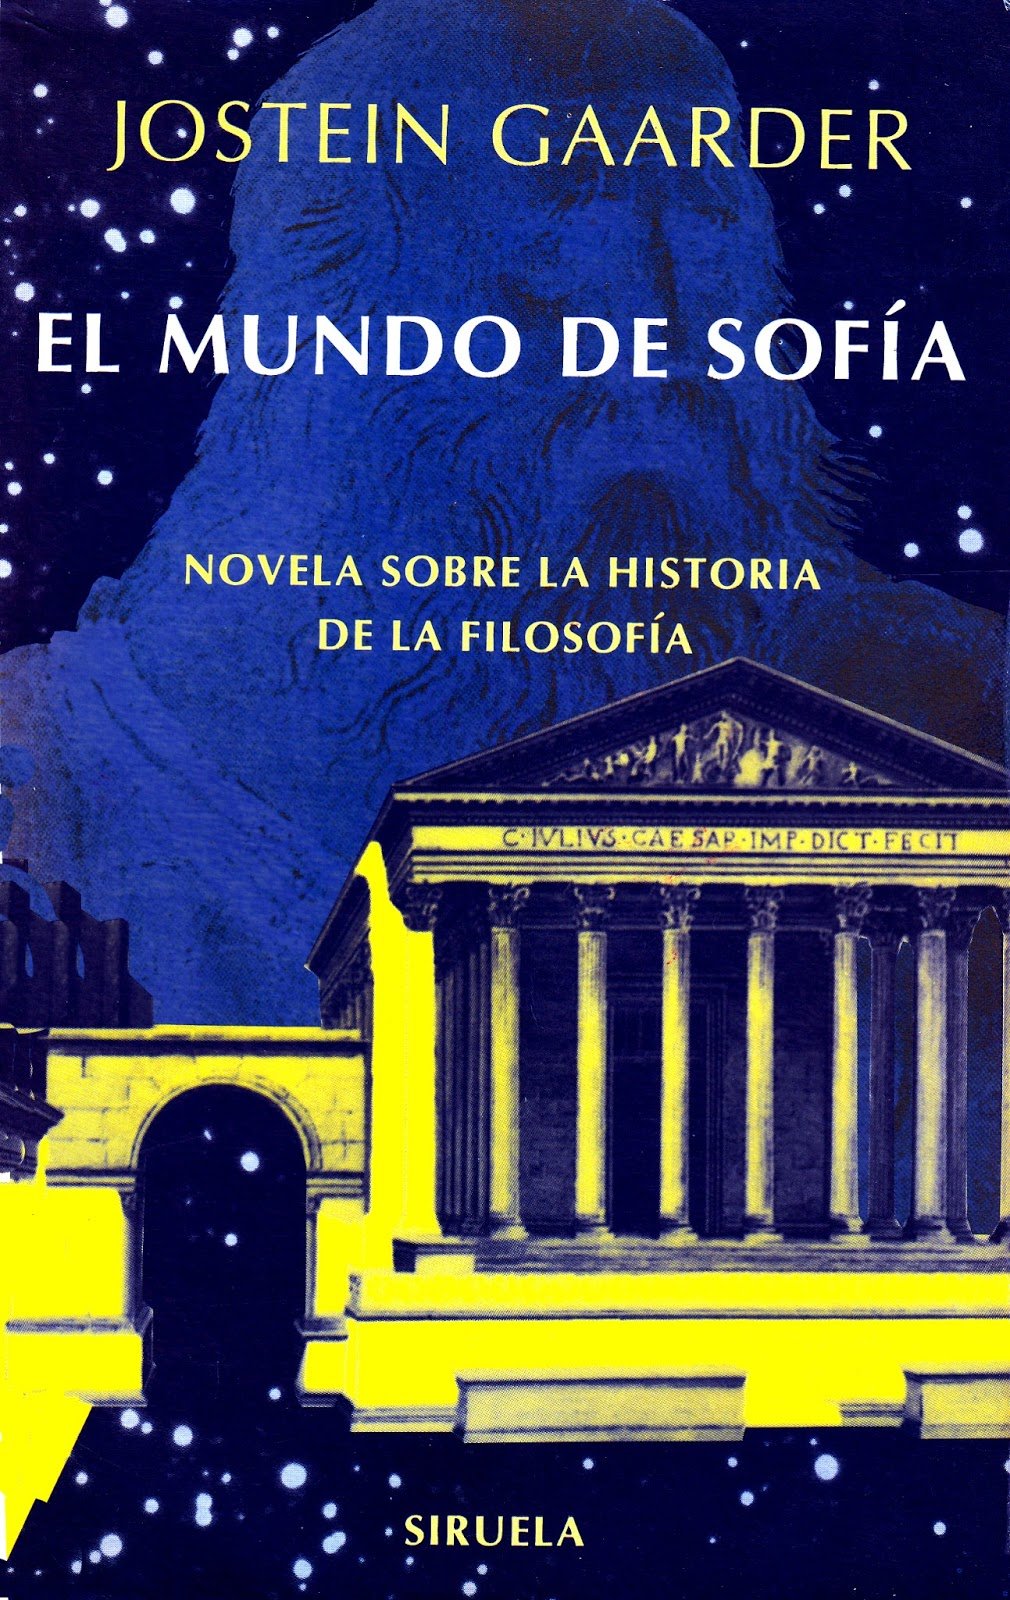 Jostein Gaarder: El Mundo de Sofía (Spanish language, 1994, Siruela)